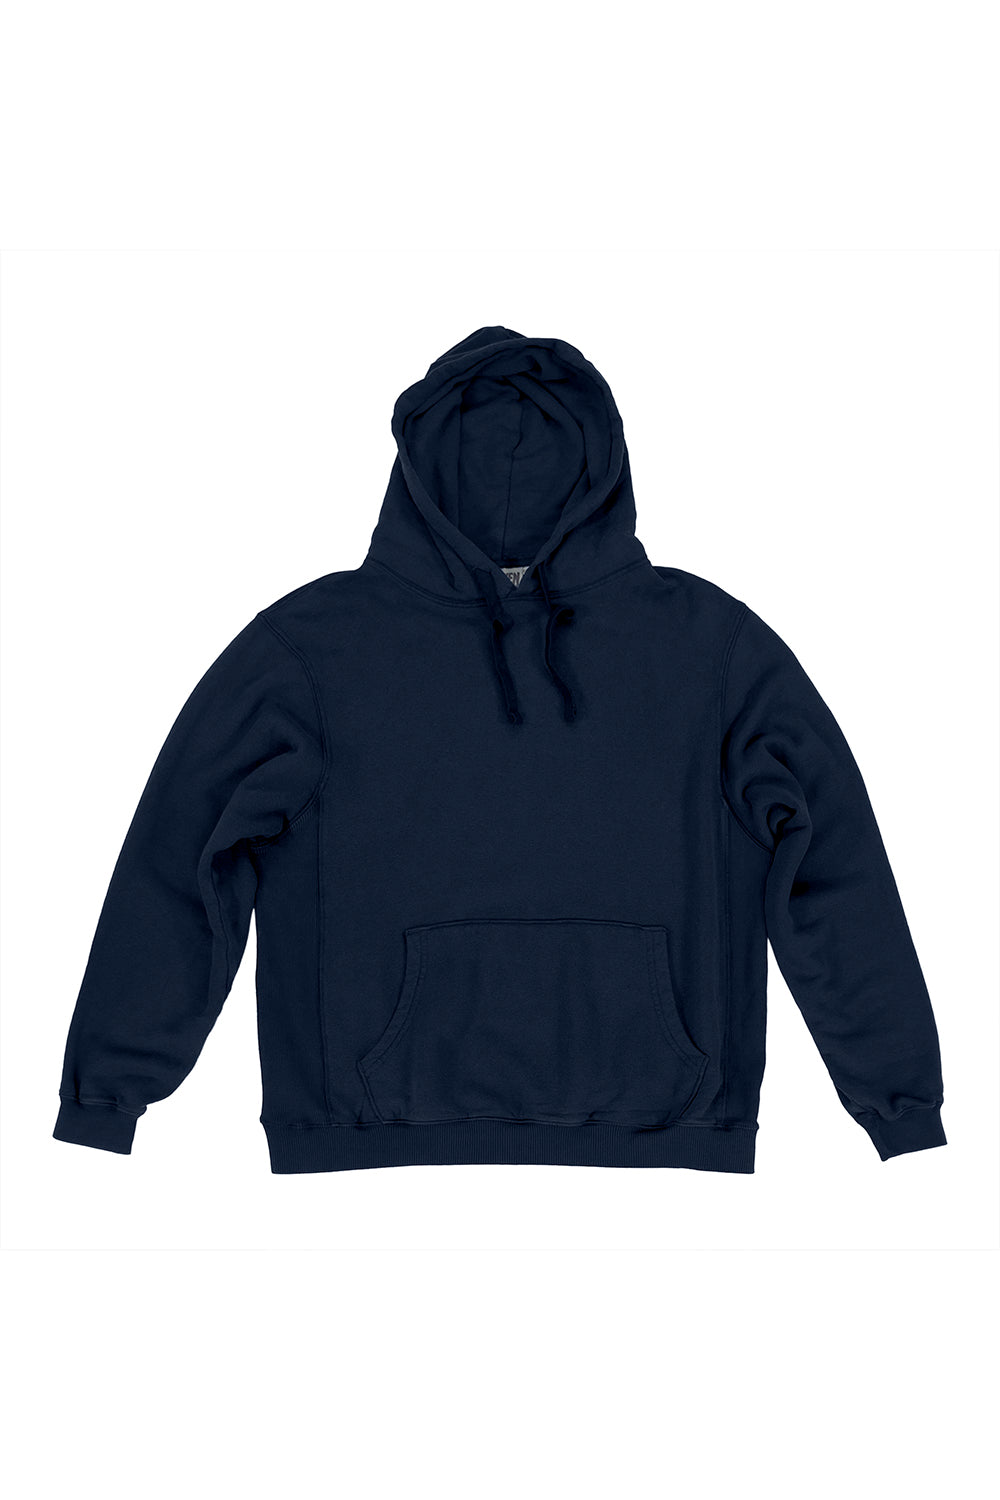 Montauk Hooded Sweatshirt | Jungmaven Hemp Clothing & Accessories / Color: Navy